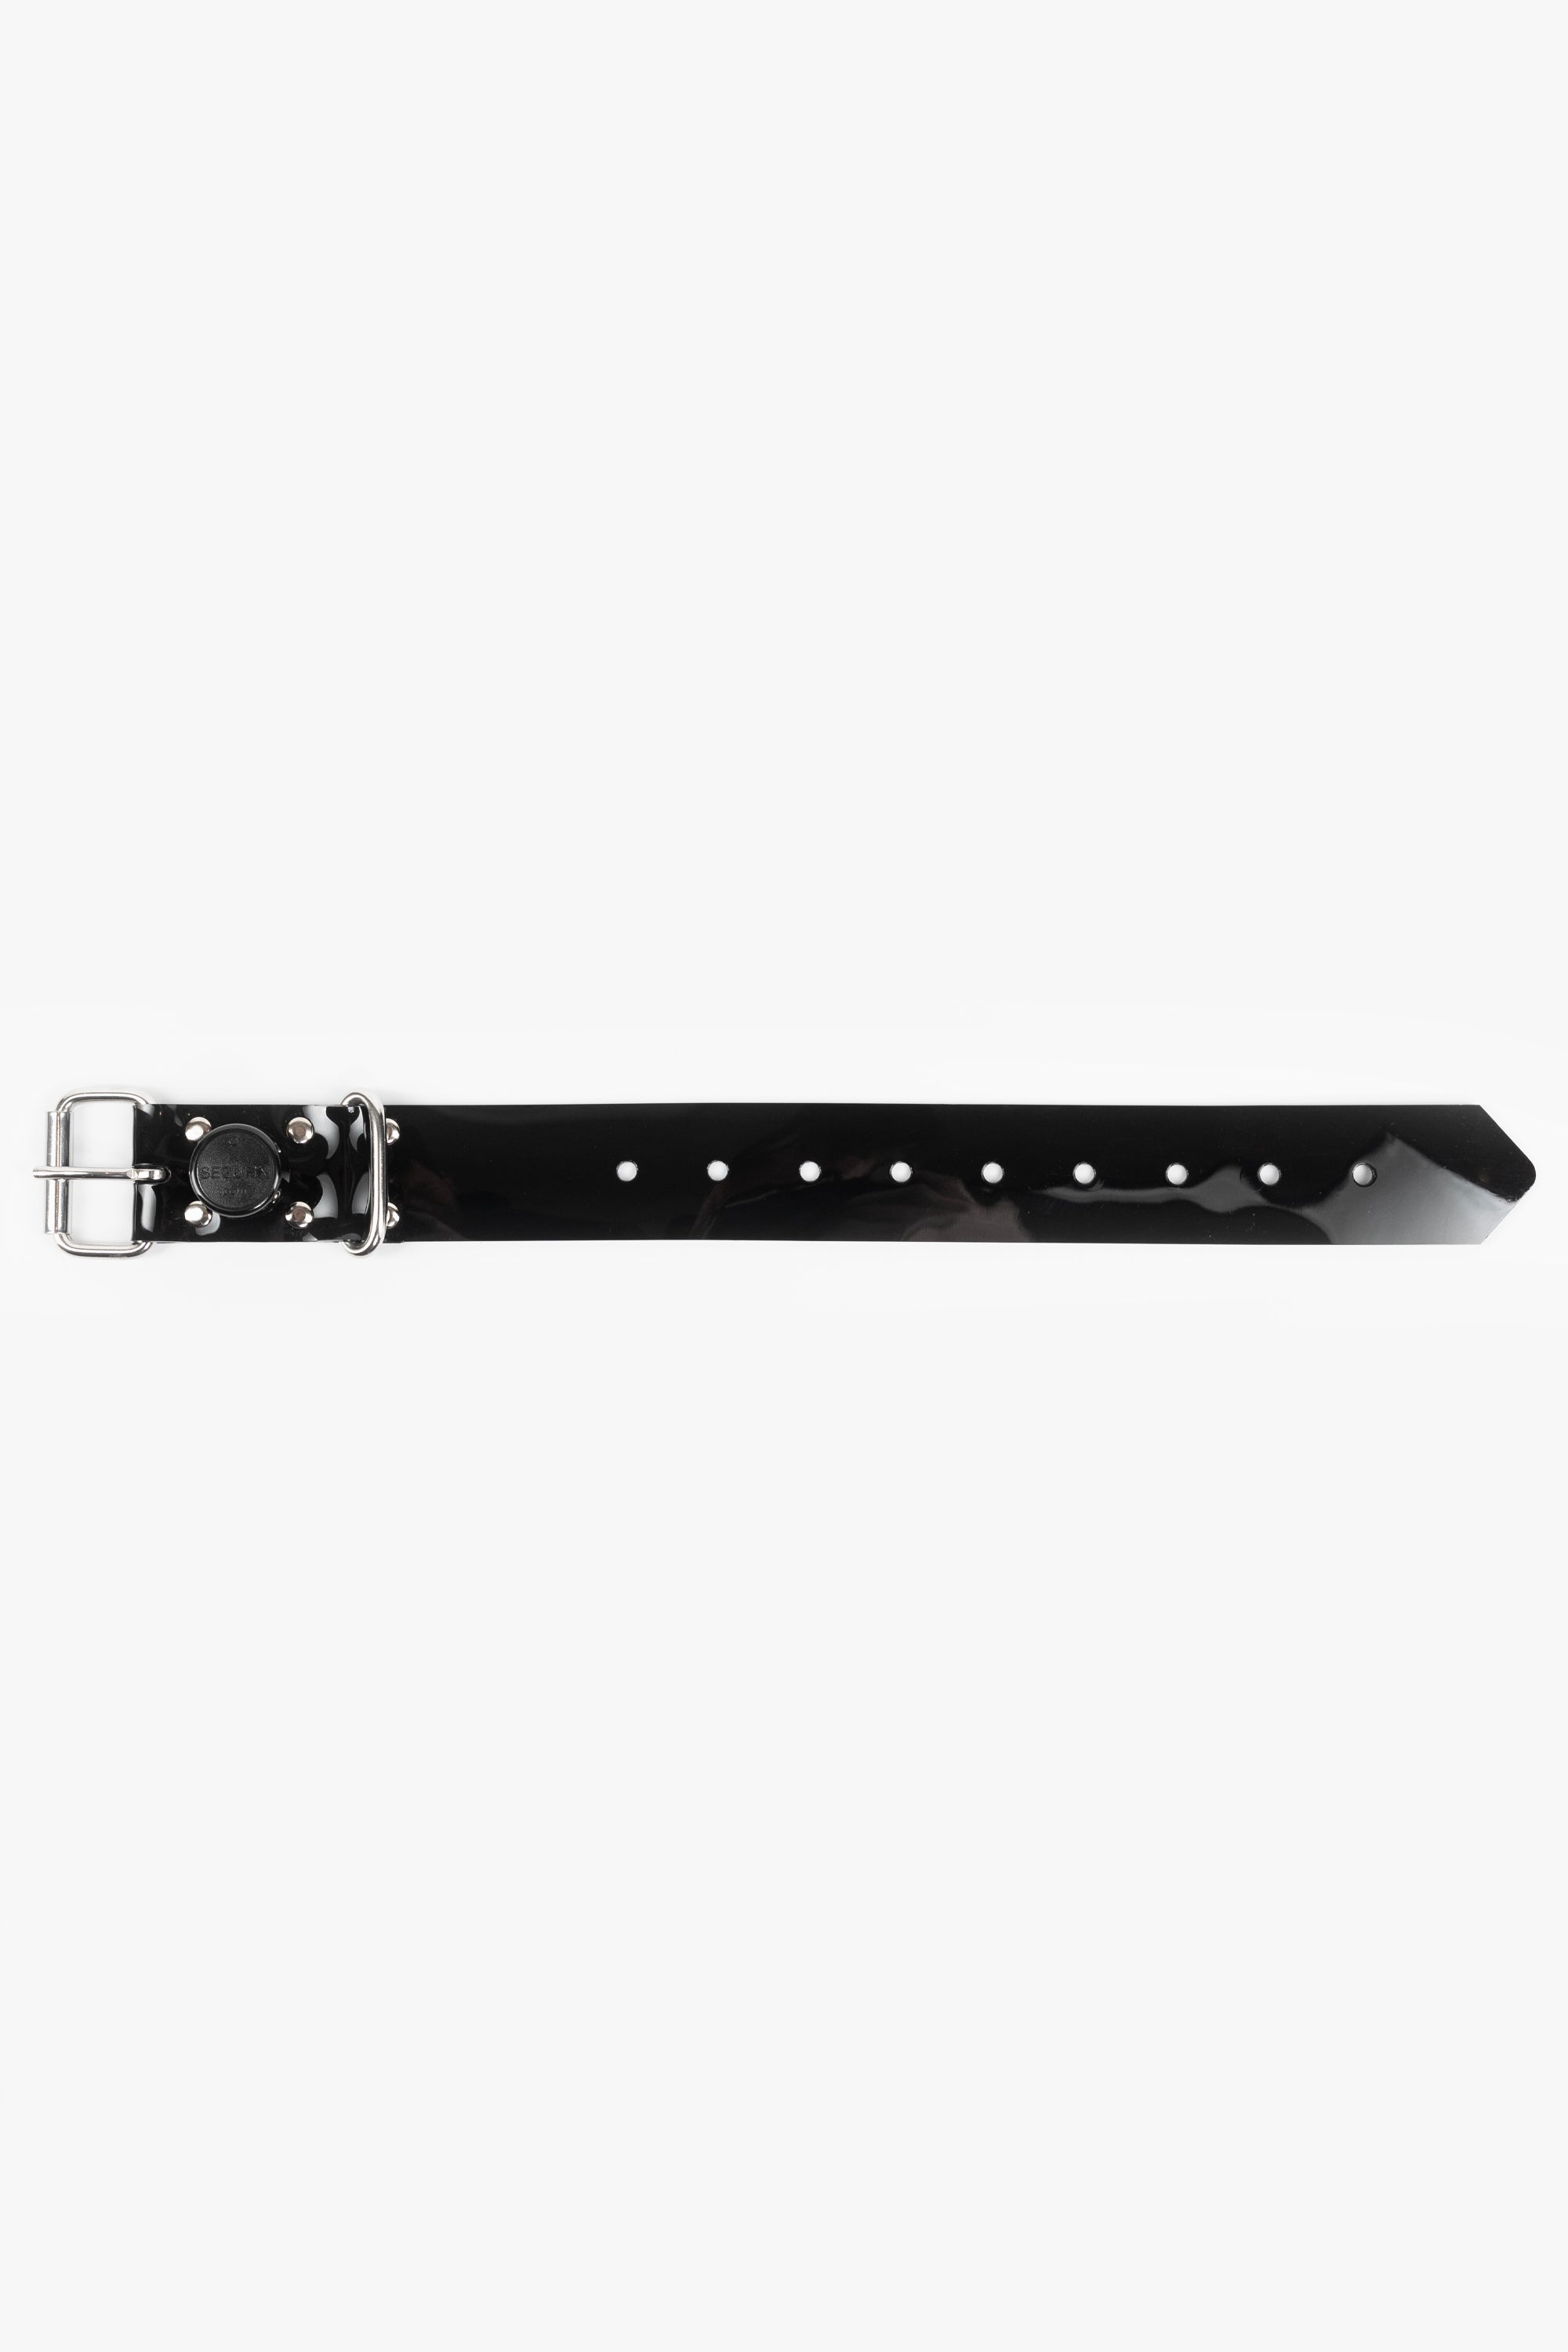 Bondage lockable segufix straps set 40 mm, black/chrome